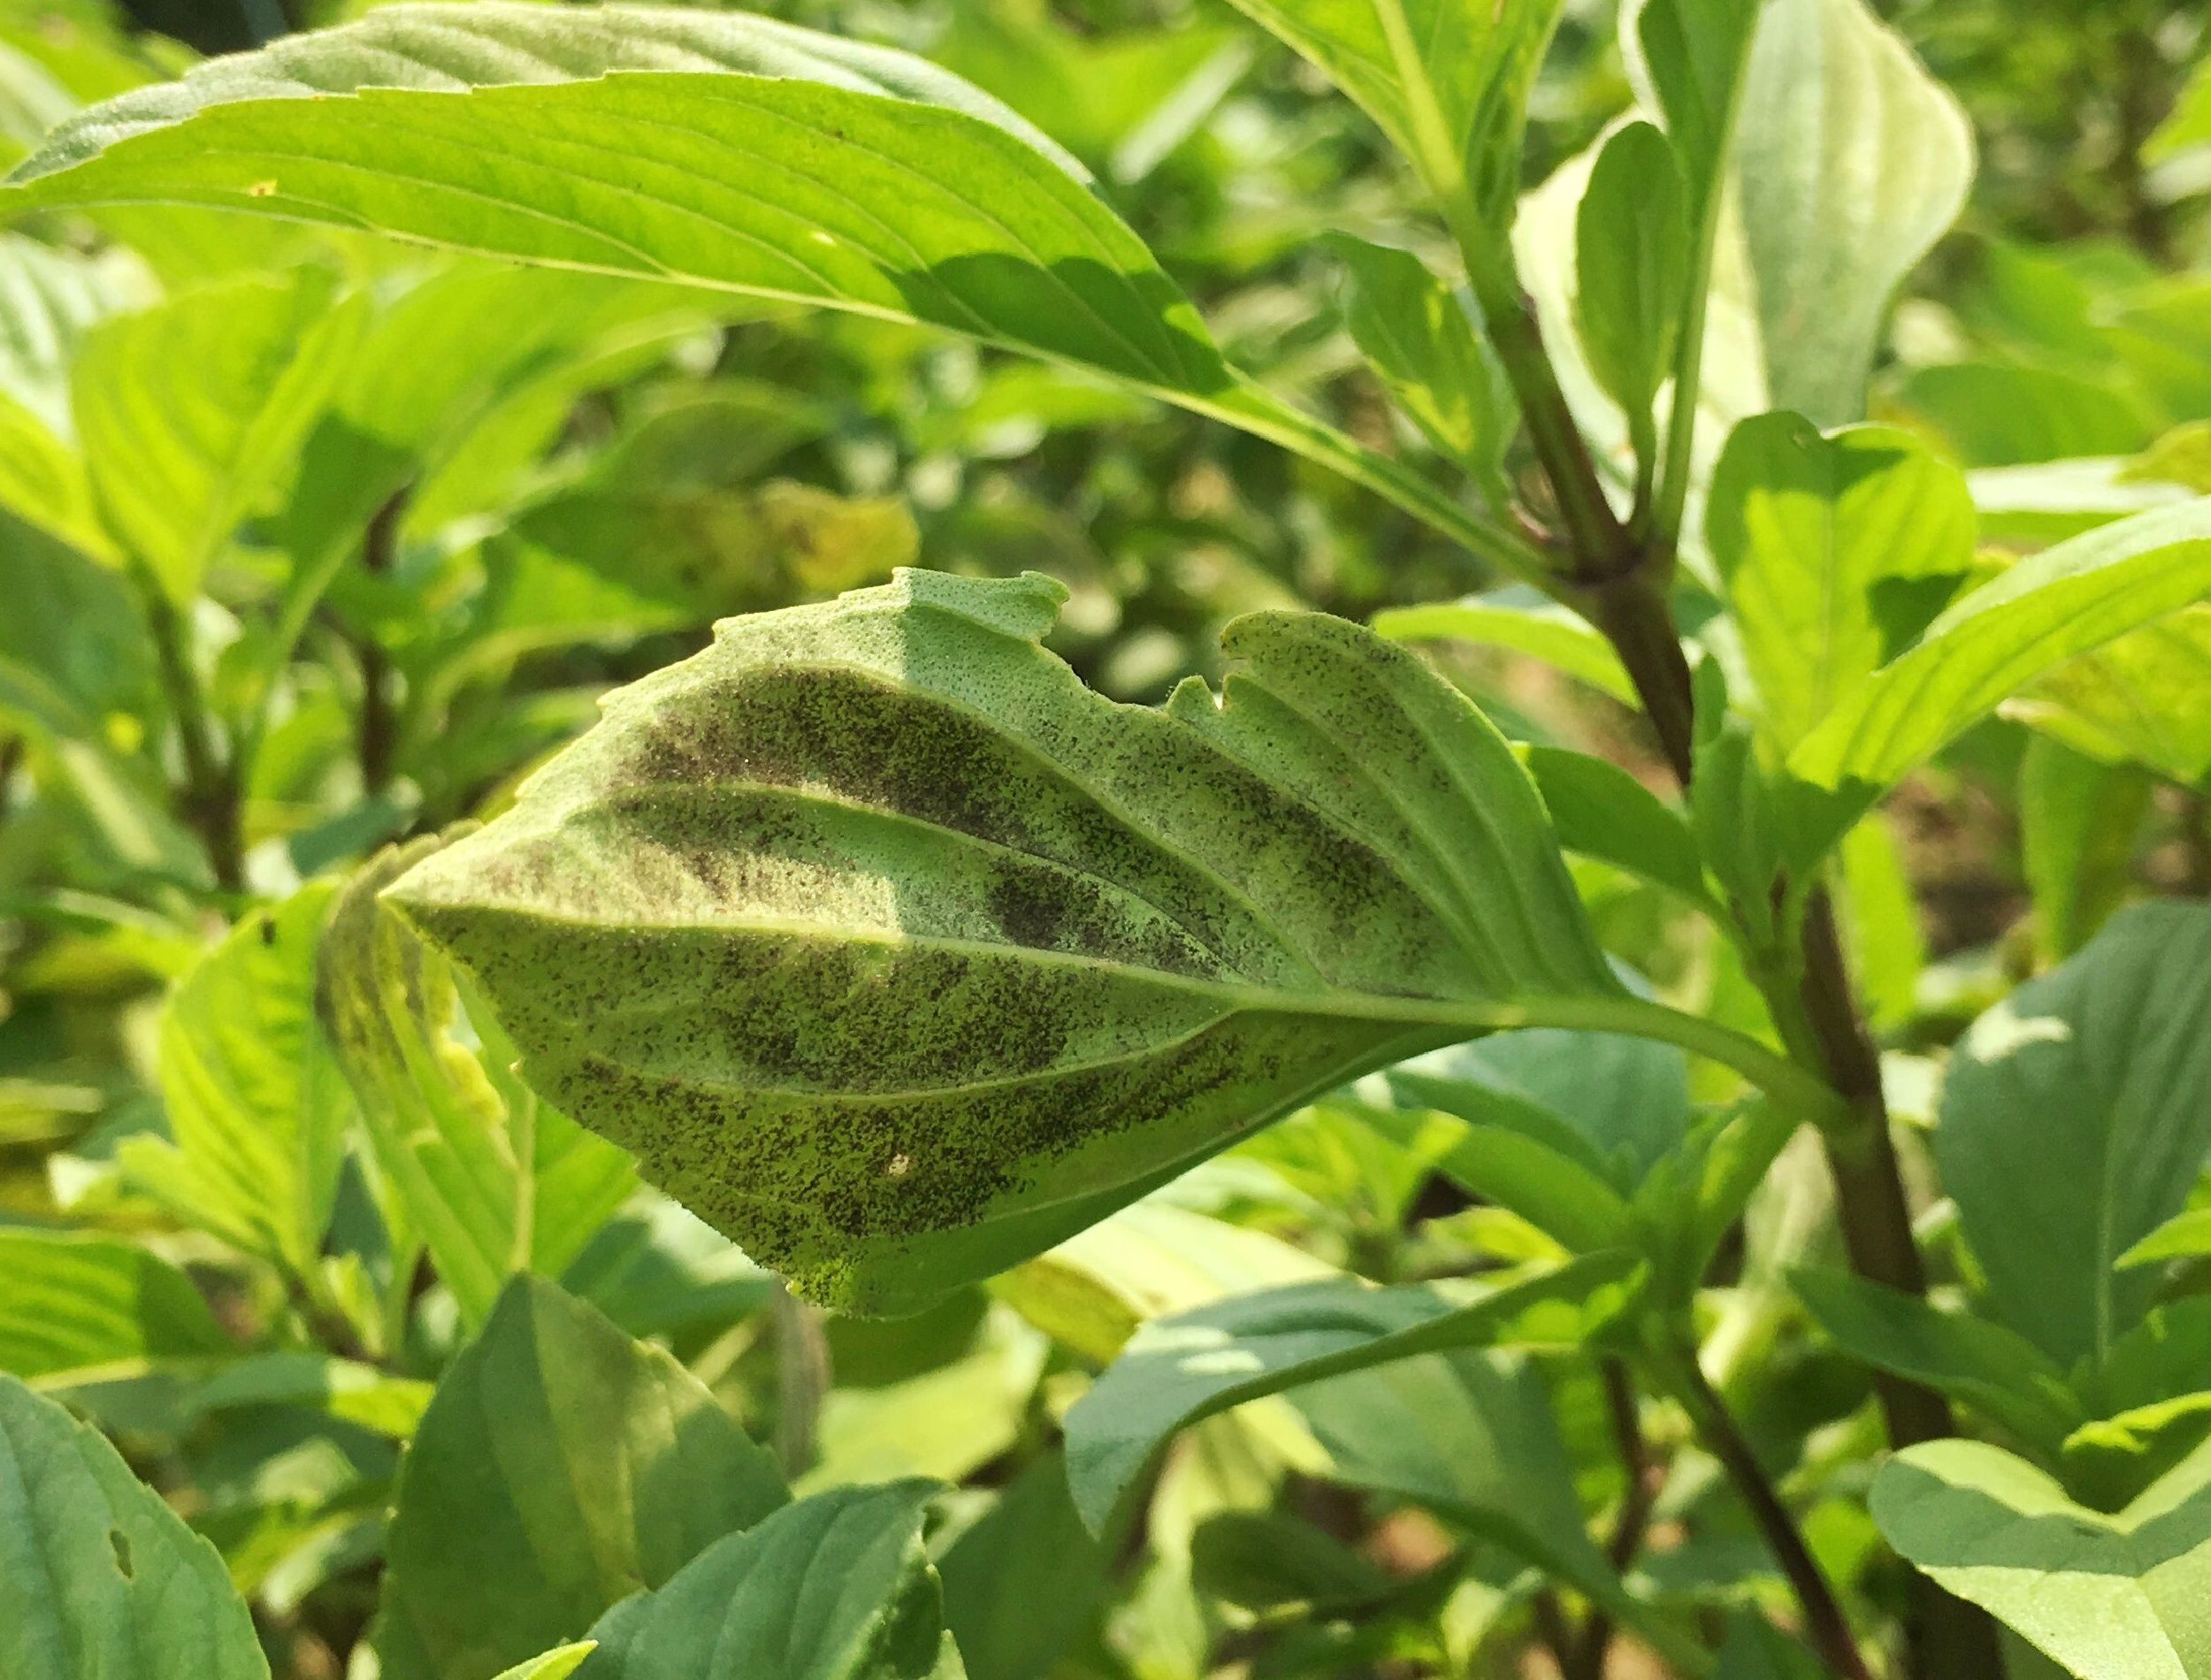 Sweet Basil Downy Mildew Disease, Peronospora sp. appear on the surface of sweet basil leaves.